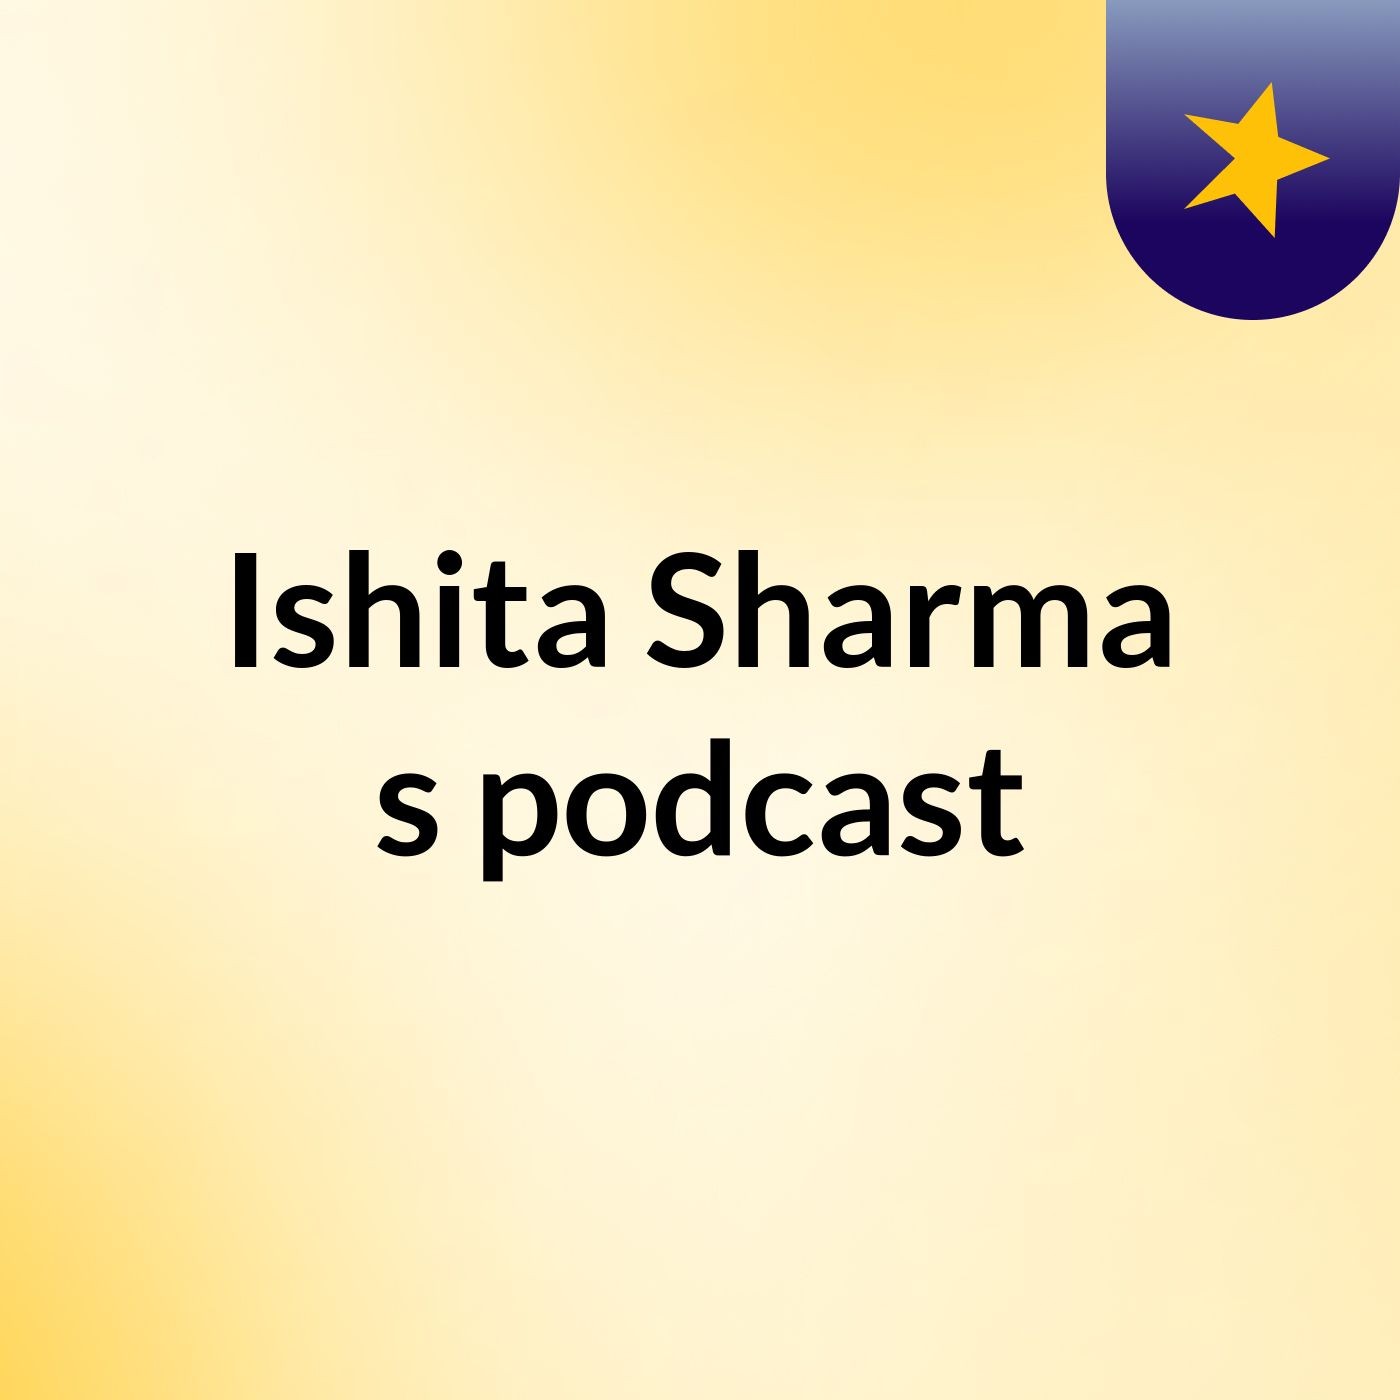 Episode 3 - Ishita Sharma's podcast